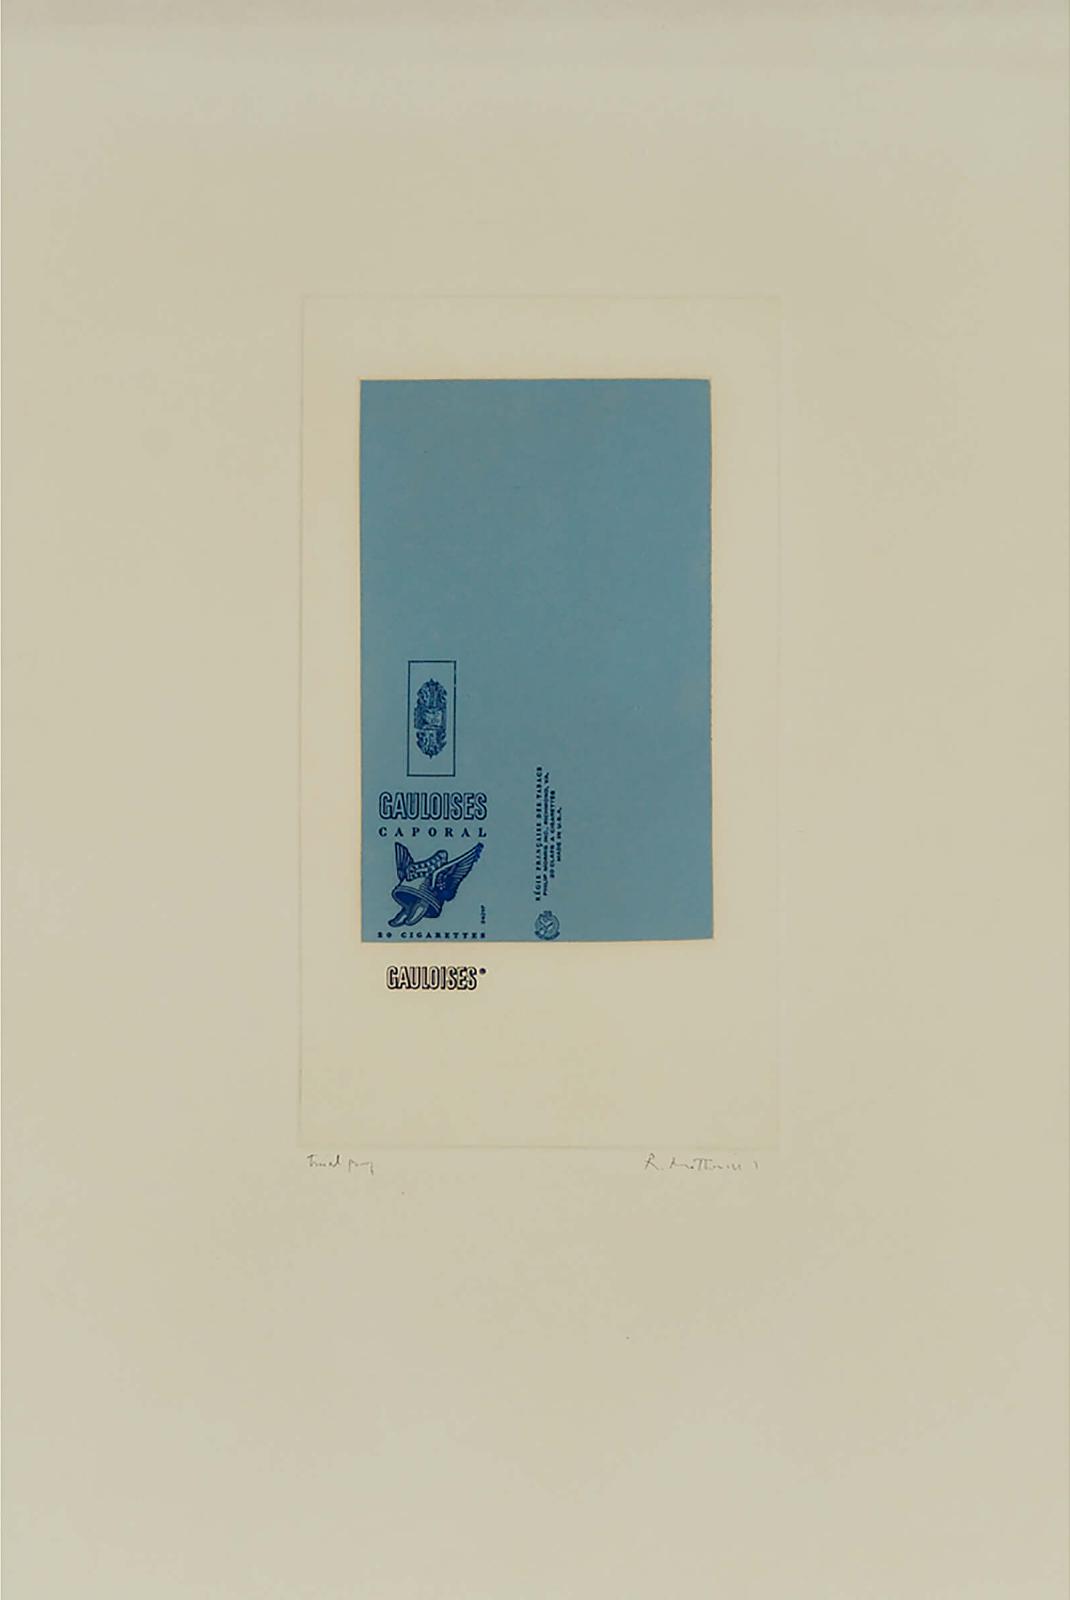 Robert Motherwell (1915-1991) - Gauloises Bleues (White), 1970 [belknap, 37]